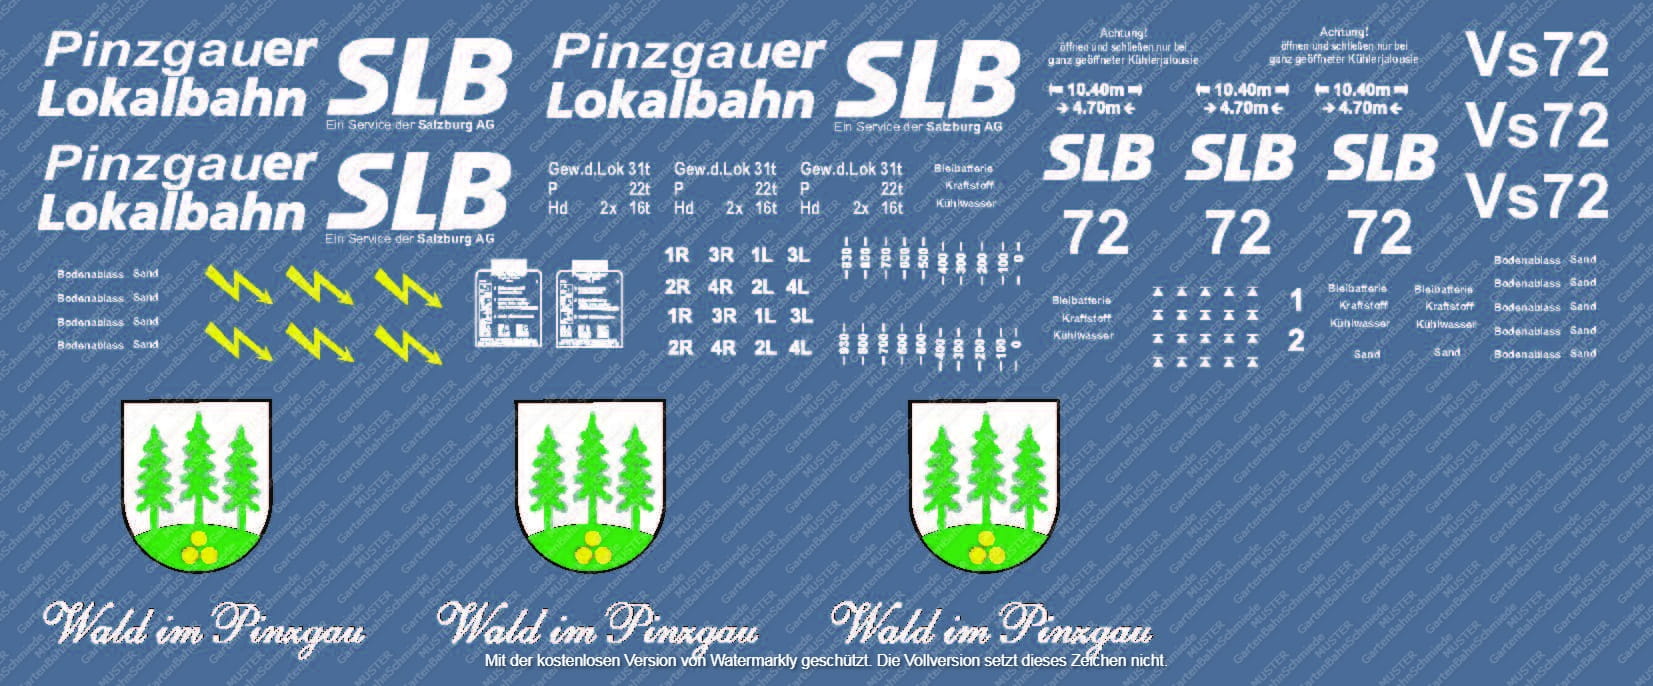 SLB Vs72 - Pinzgauer Lokalbahn